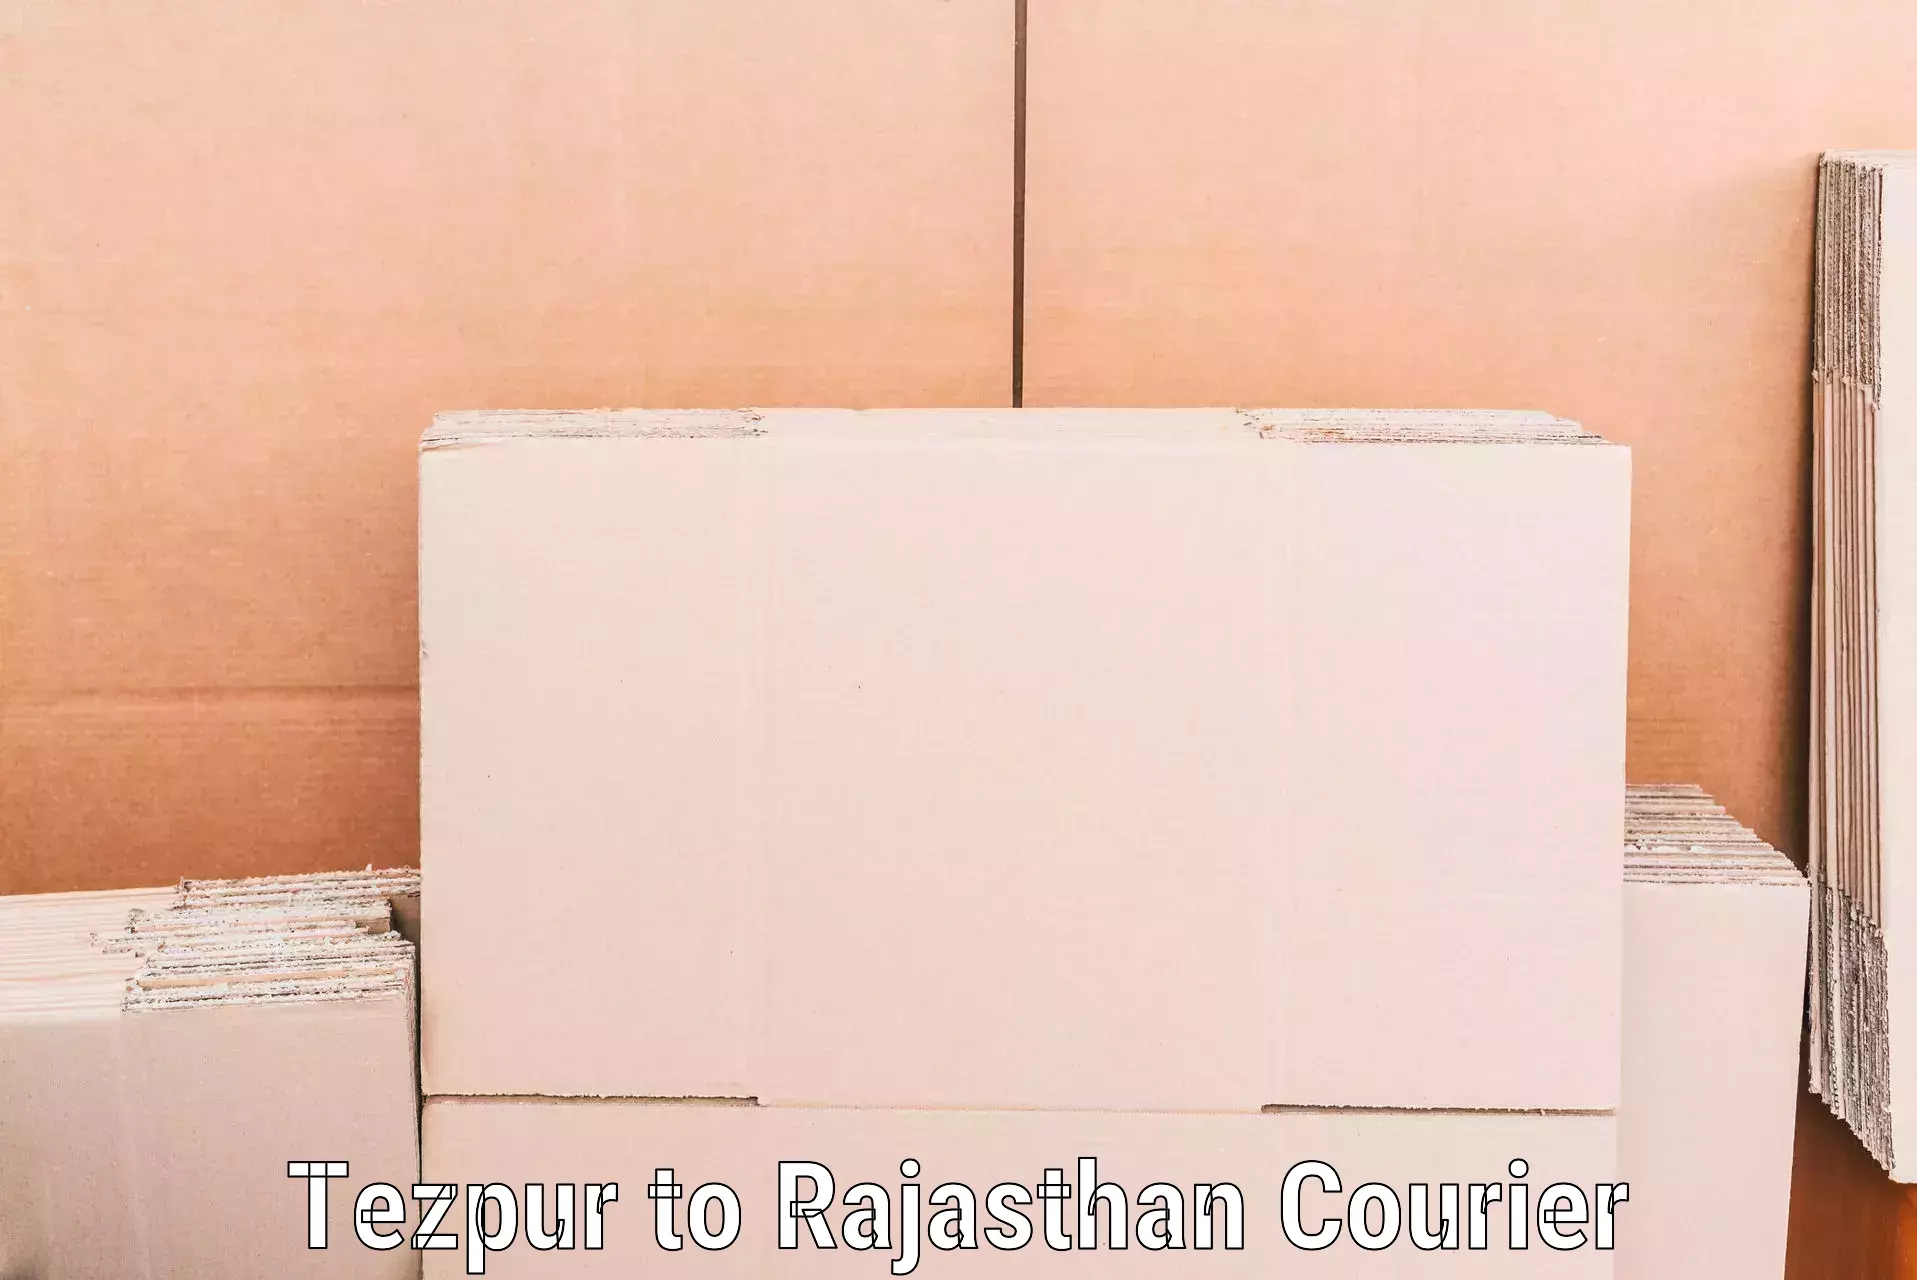 Professional moving company Tezpur to Bari Dholpur